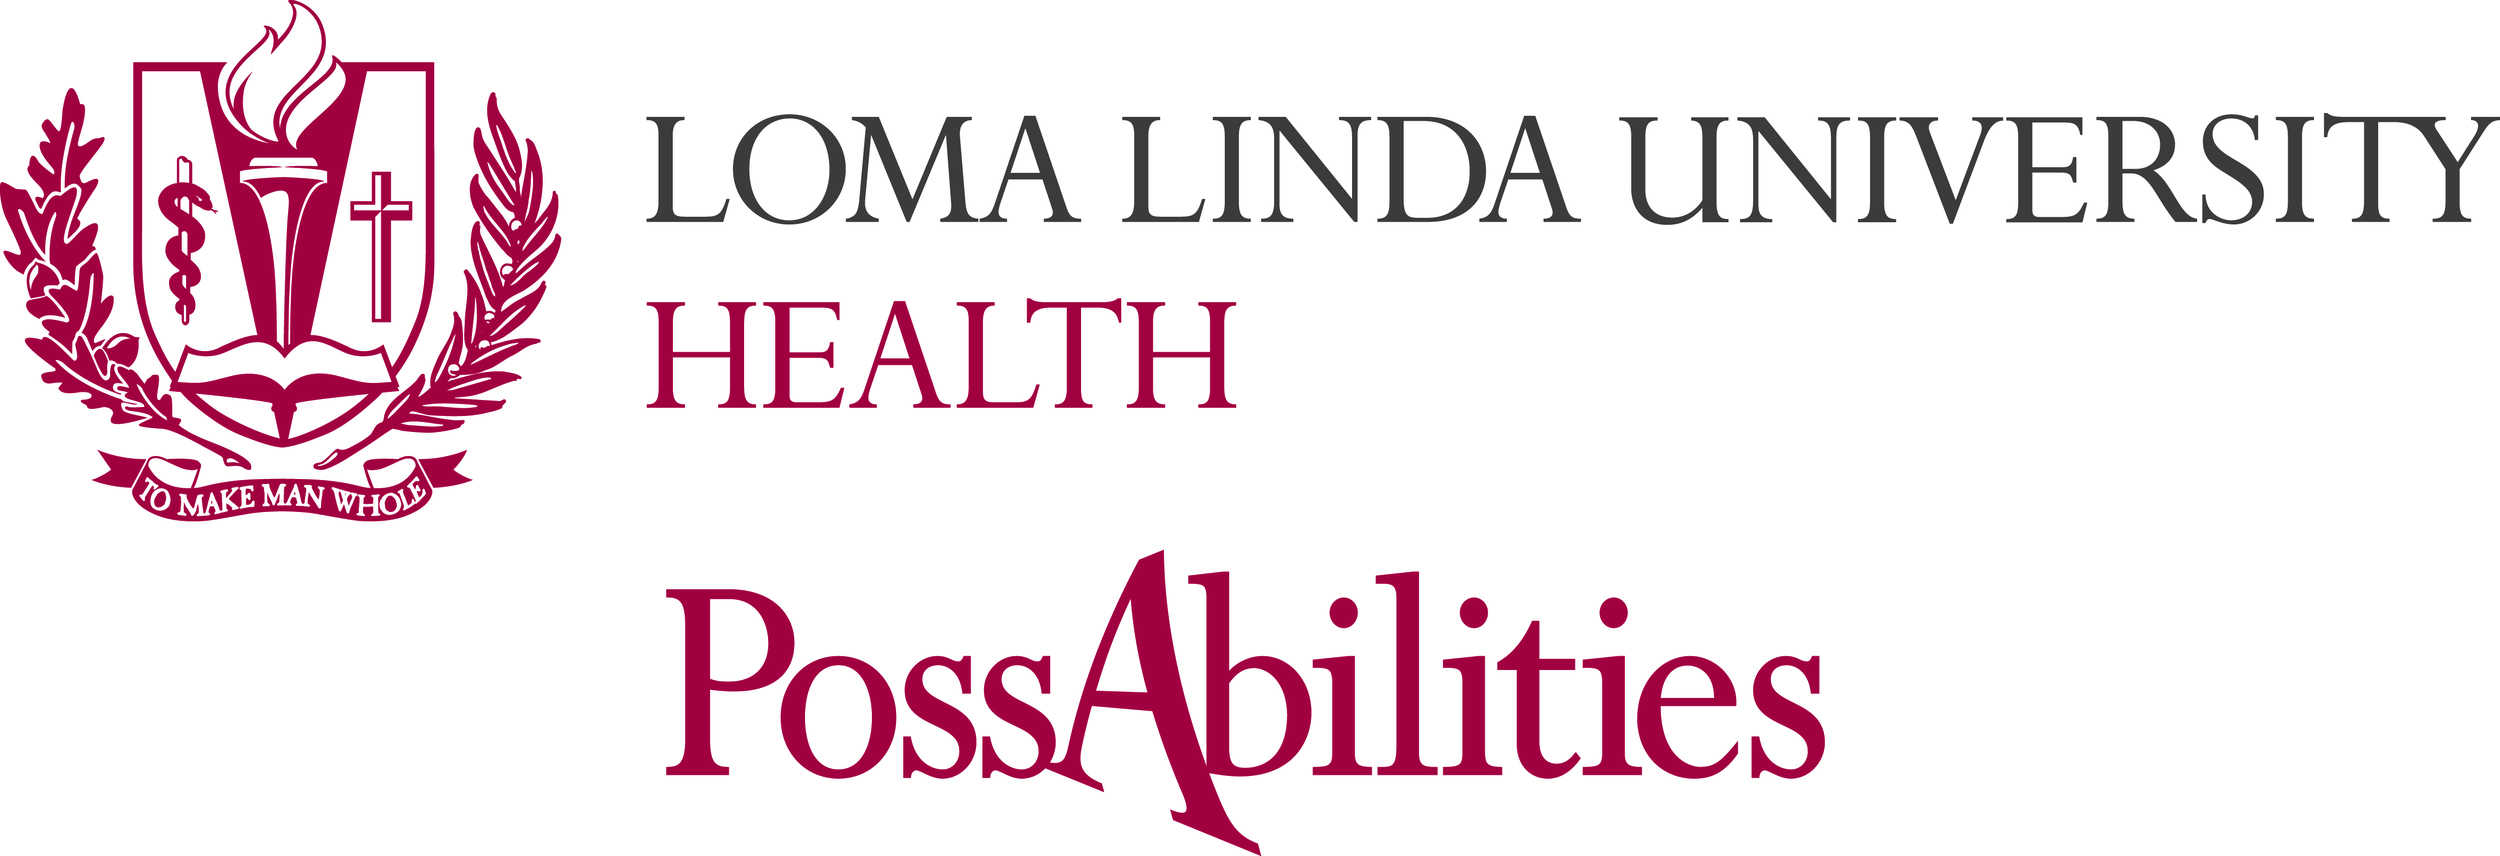 Loma LInda University PossAbilities 